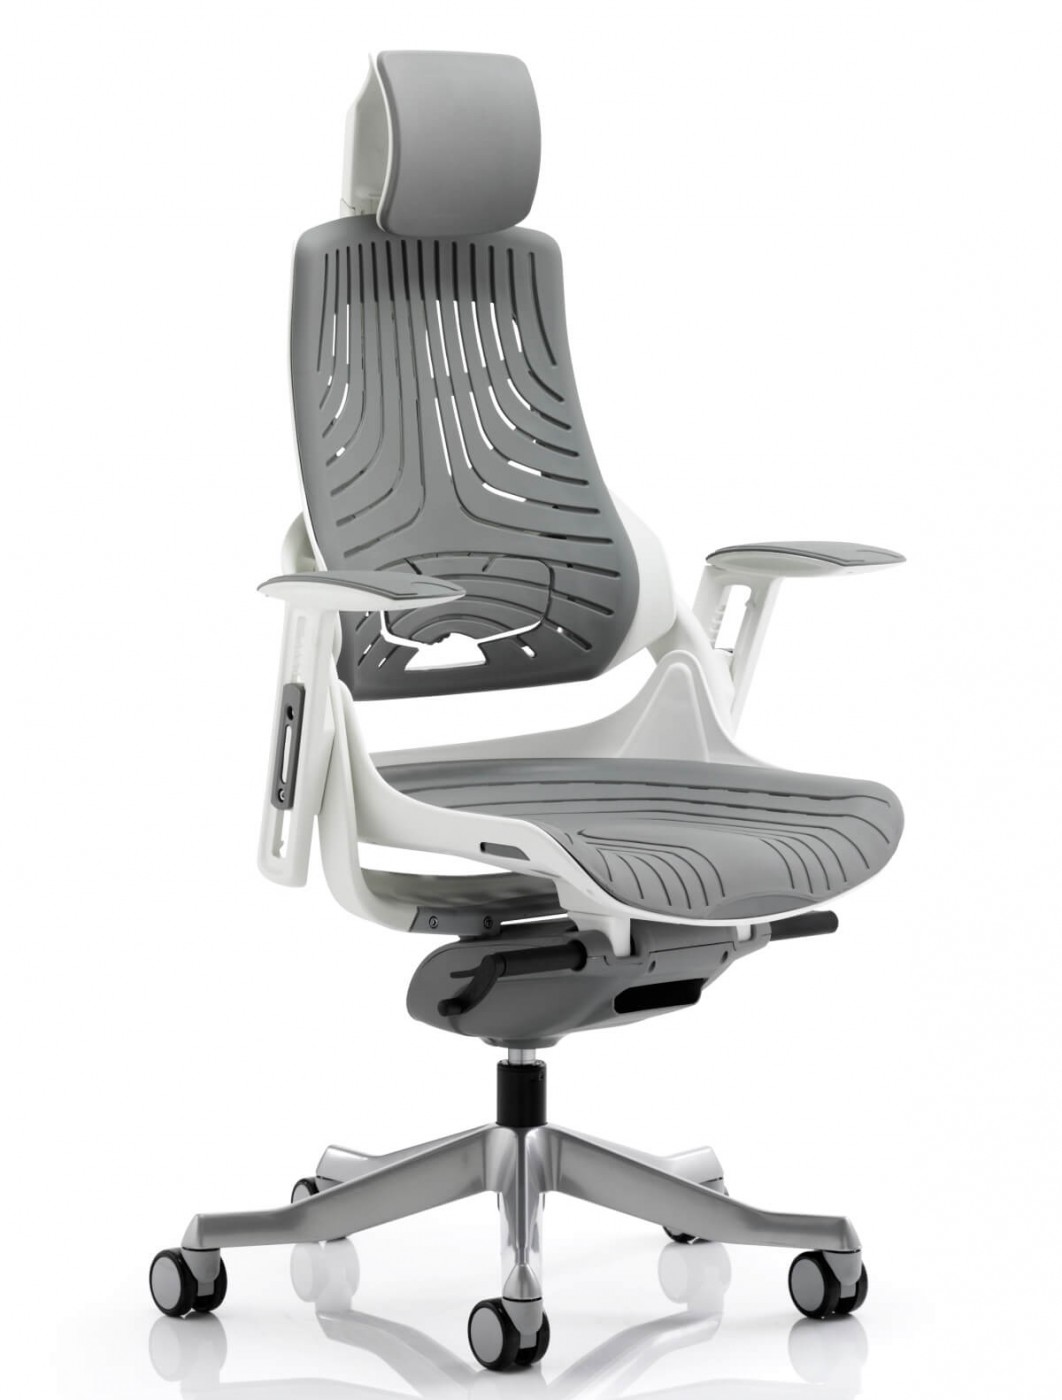 MlSvaVfX Dynamic Zure Grey Elastomer Office Chair Kc0164 001 